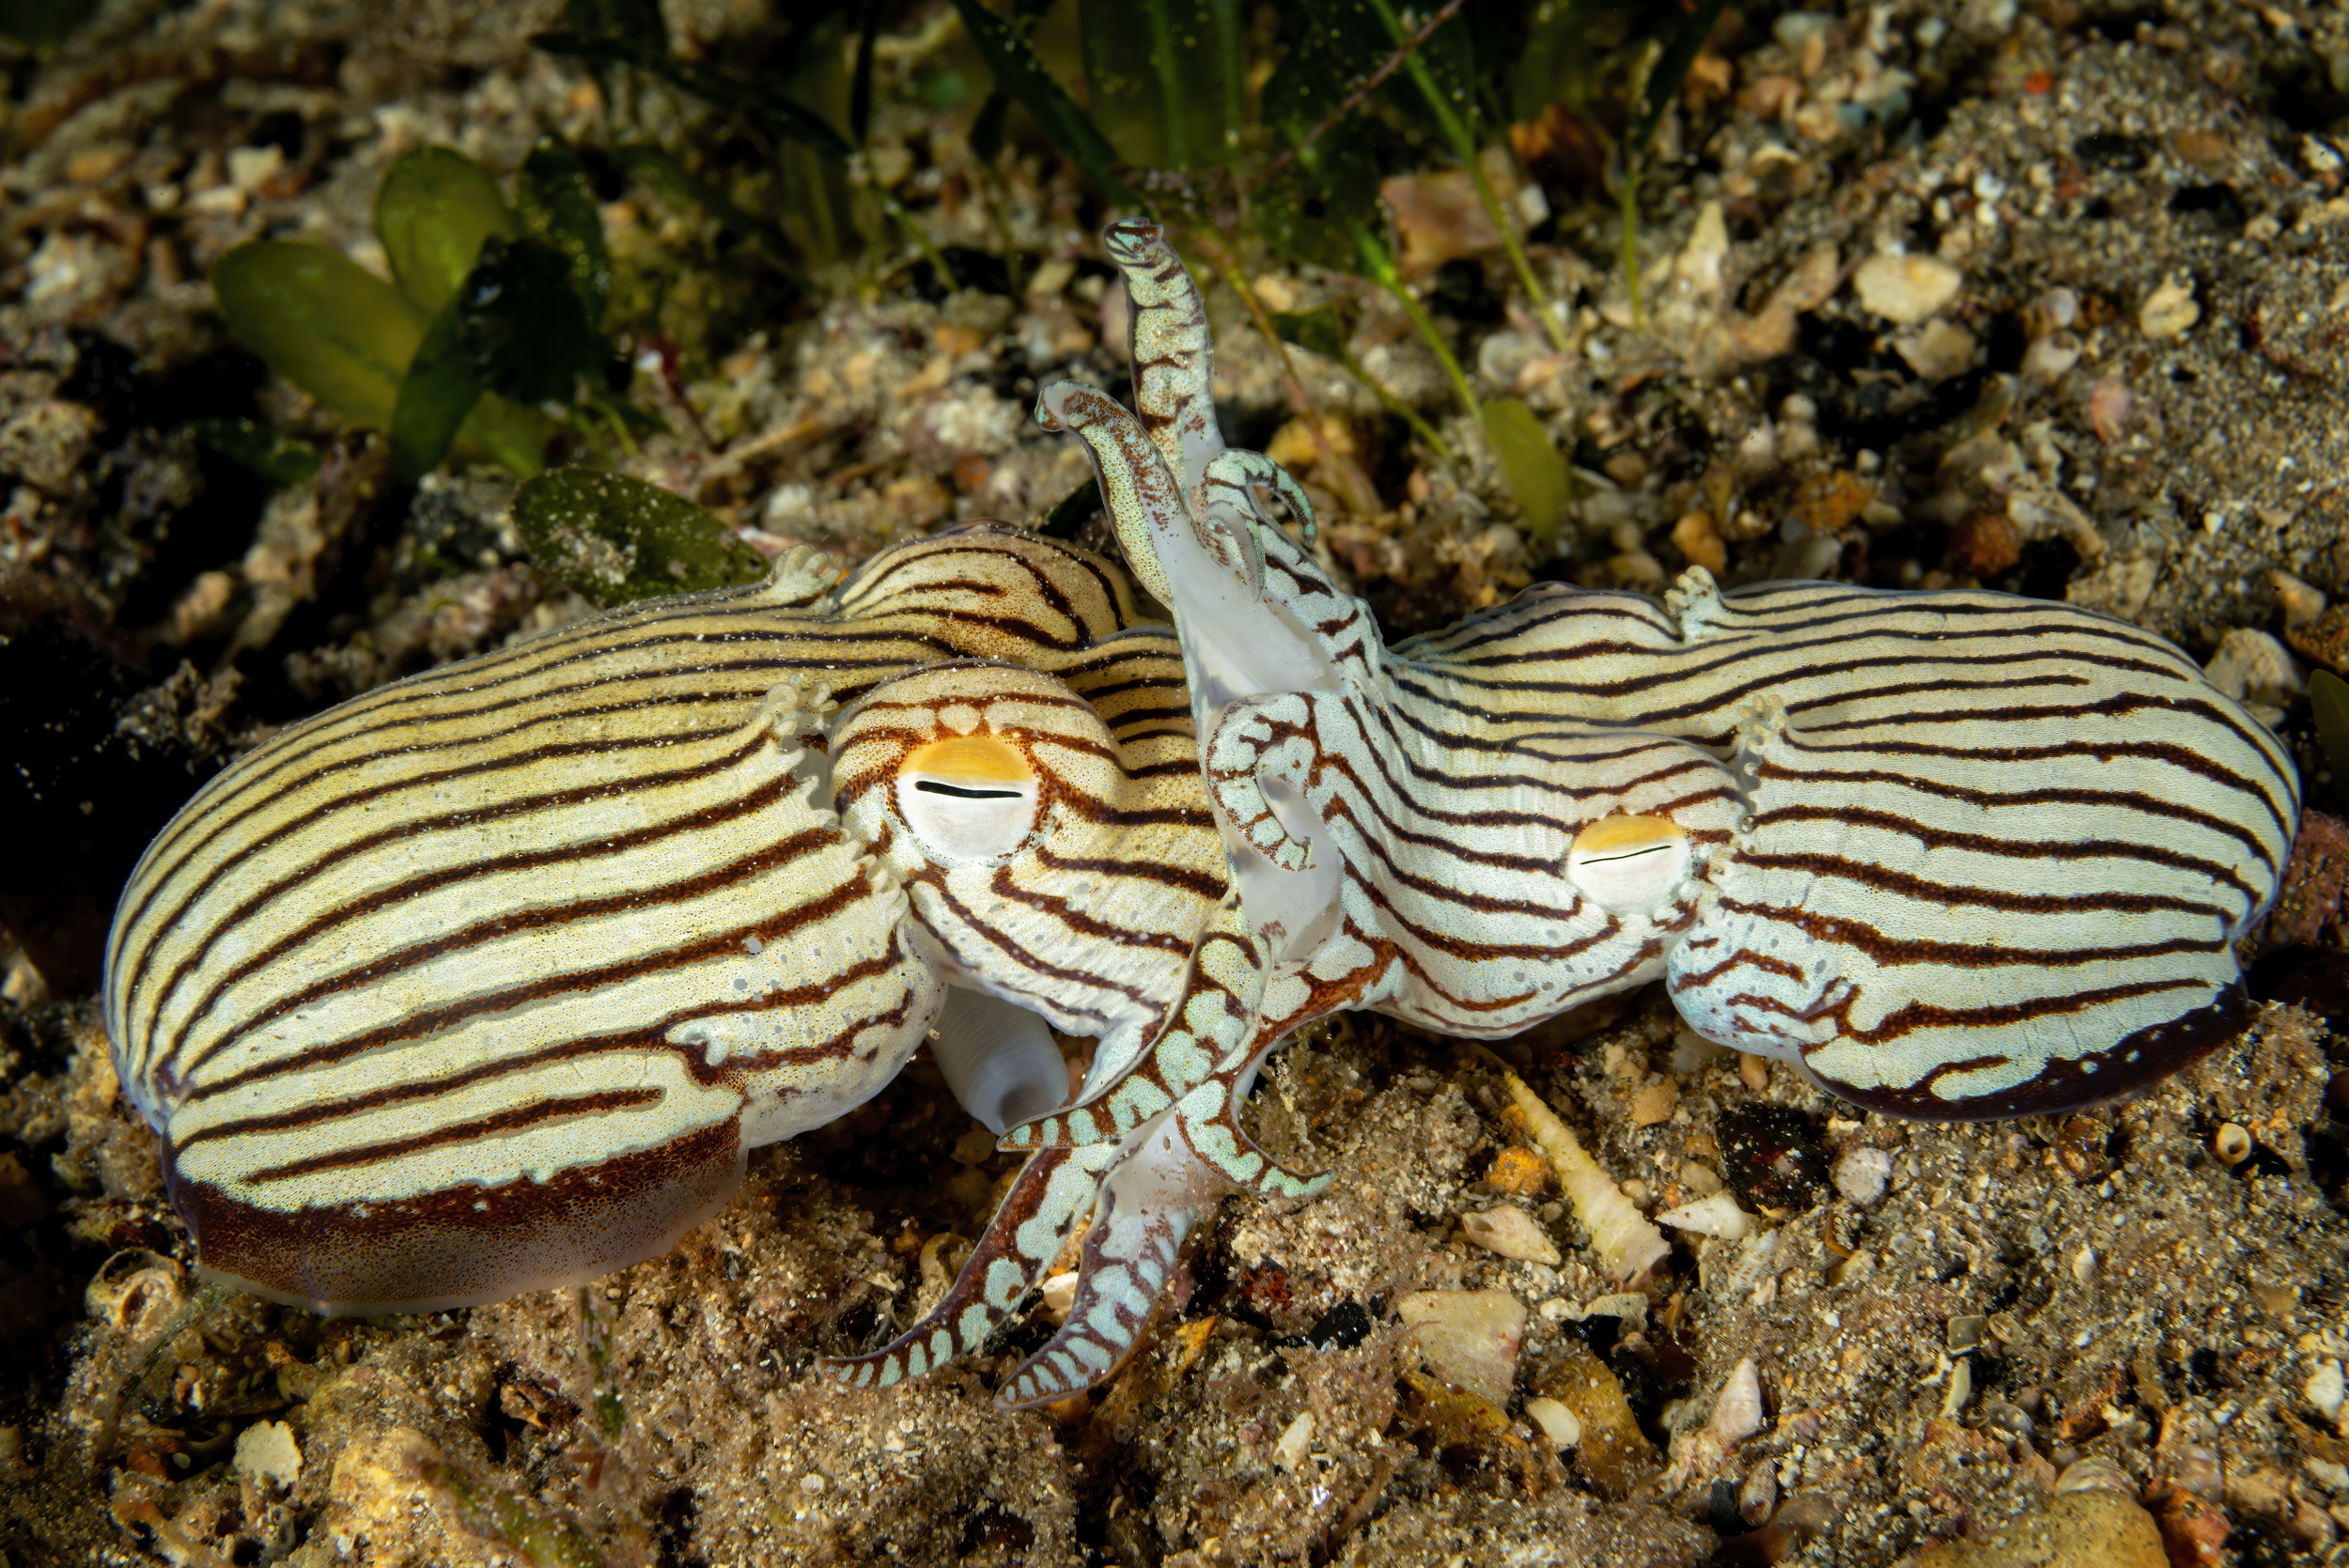 Mating pyjama squid, Edithburgh Jetty, South Australia. Photo by Don Silcock.